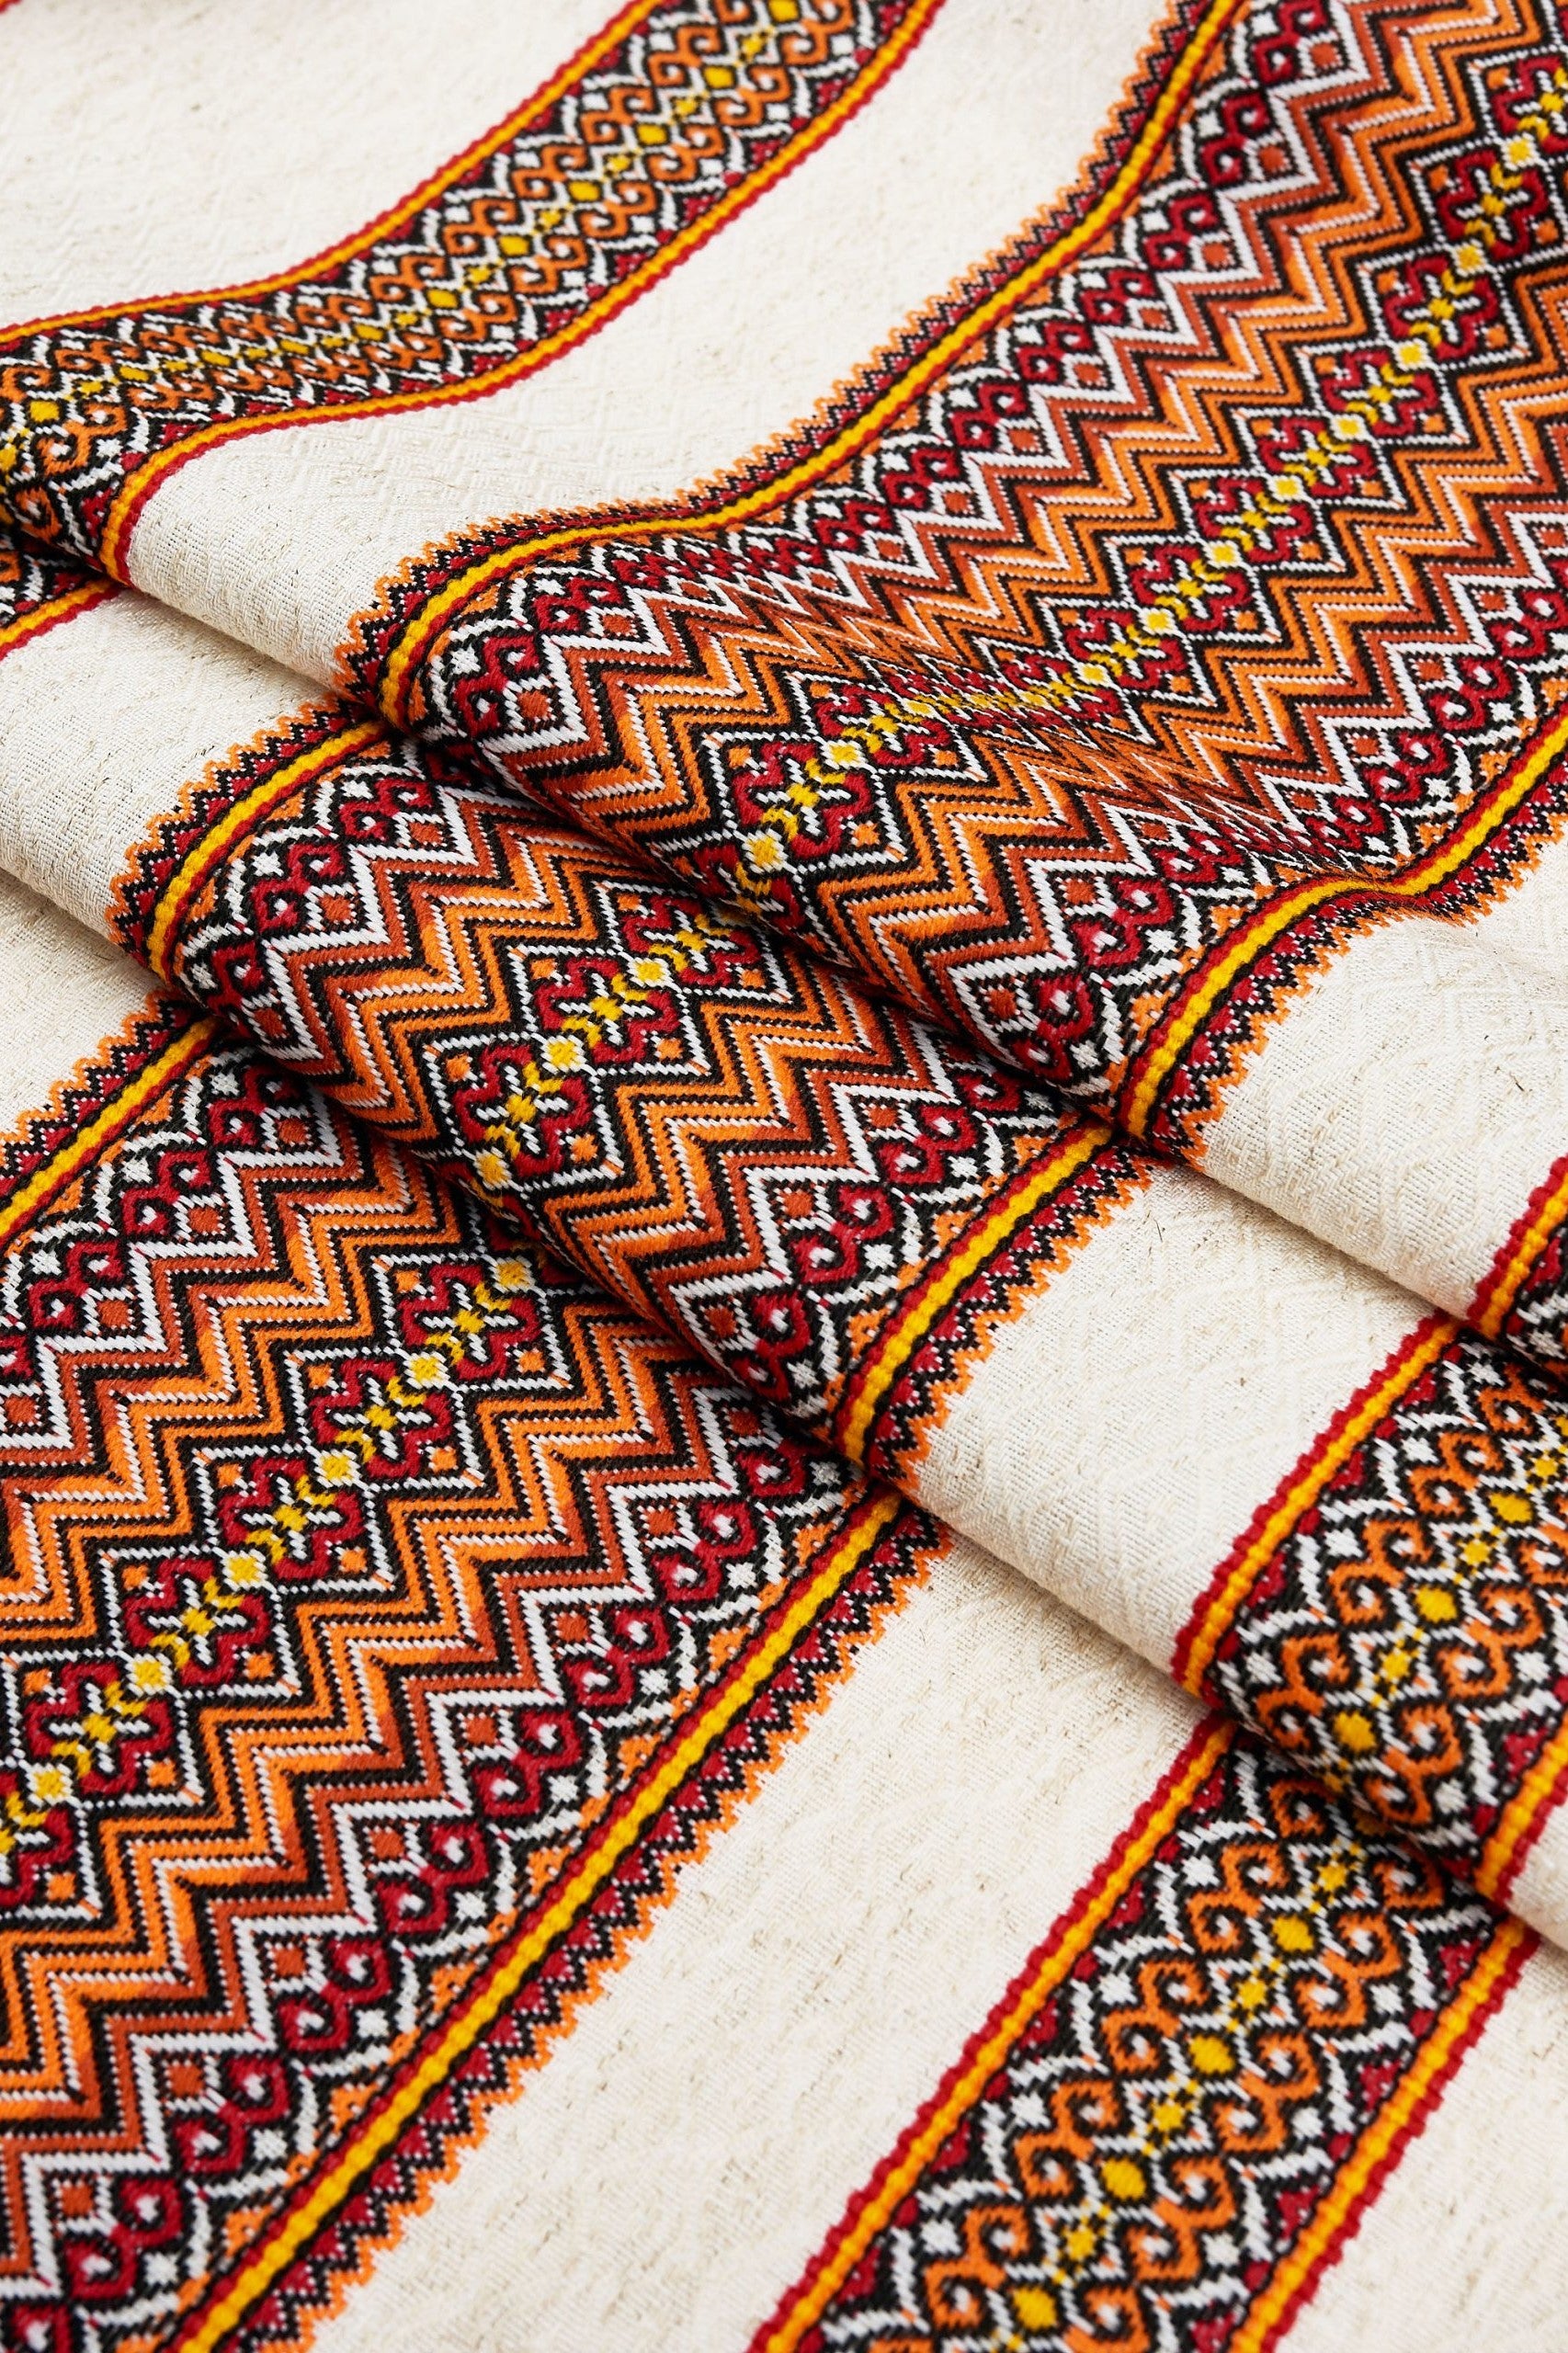 Ukrainian woven fabric "Linen chic" by yard